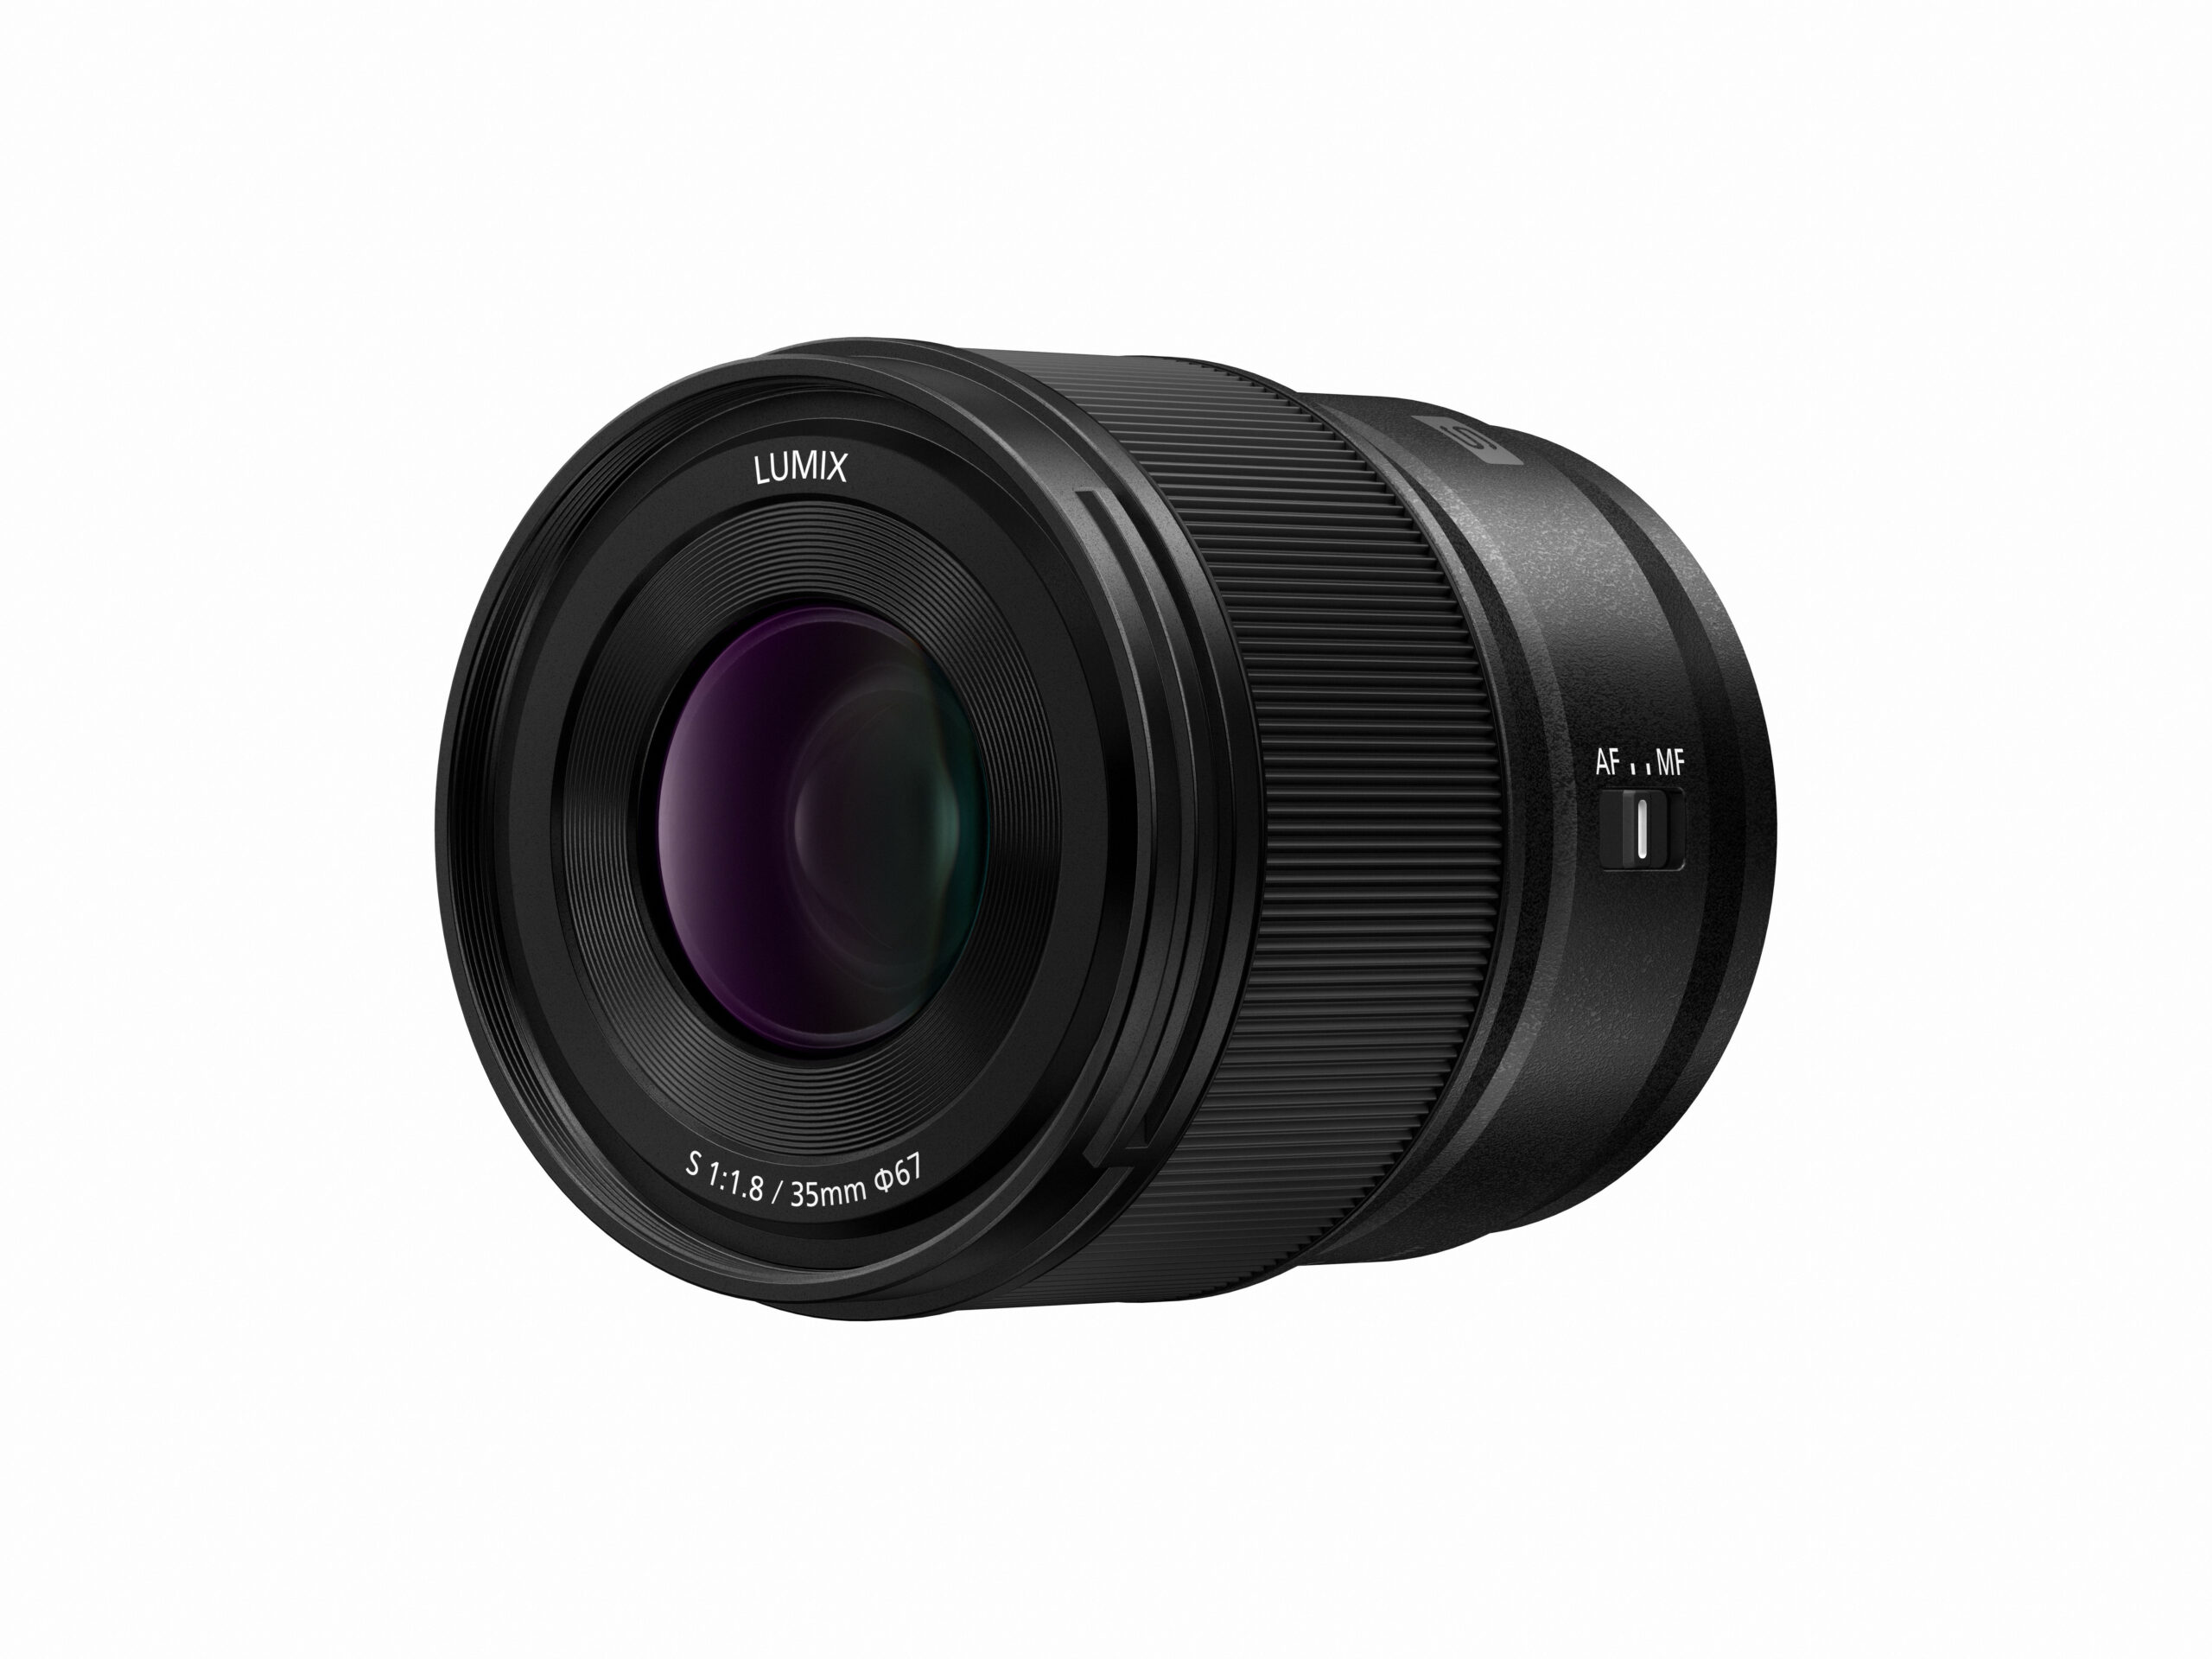 Baan Okkernoot Krachtig Panasonic LUMIX S 35mm f/1.8 Lens Introduced | CineD